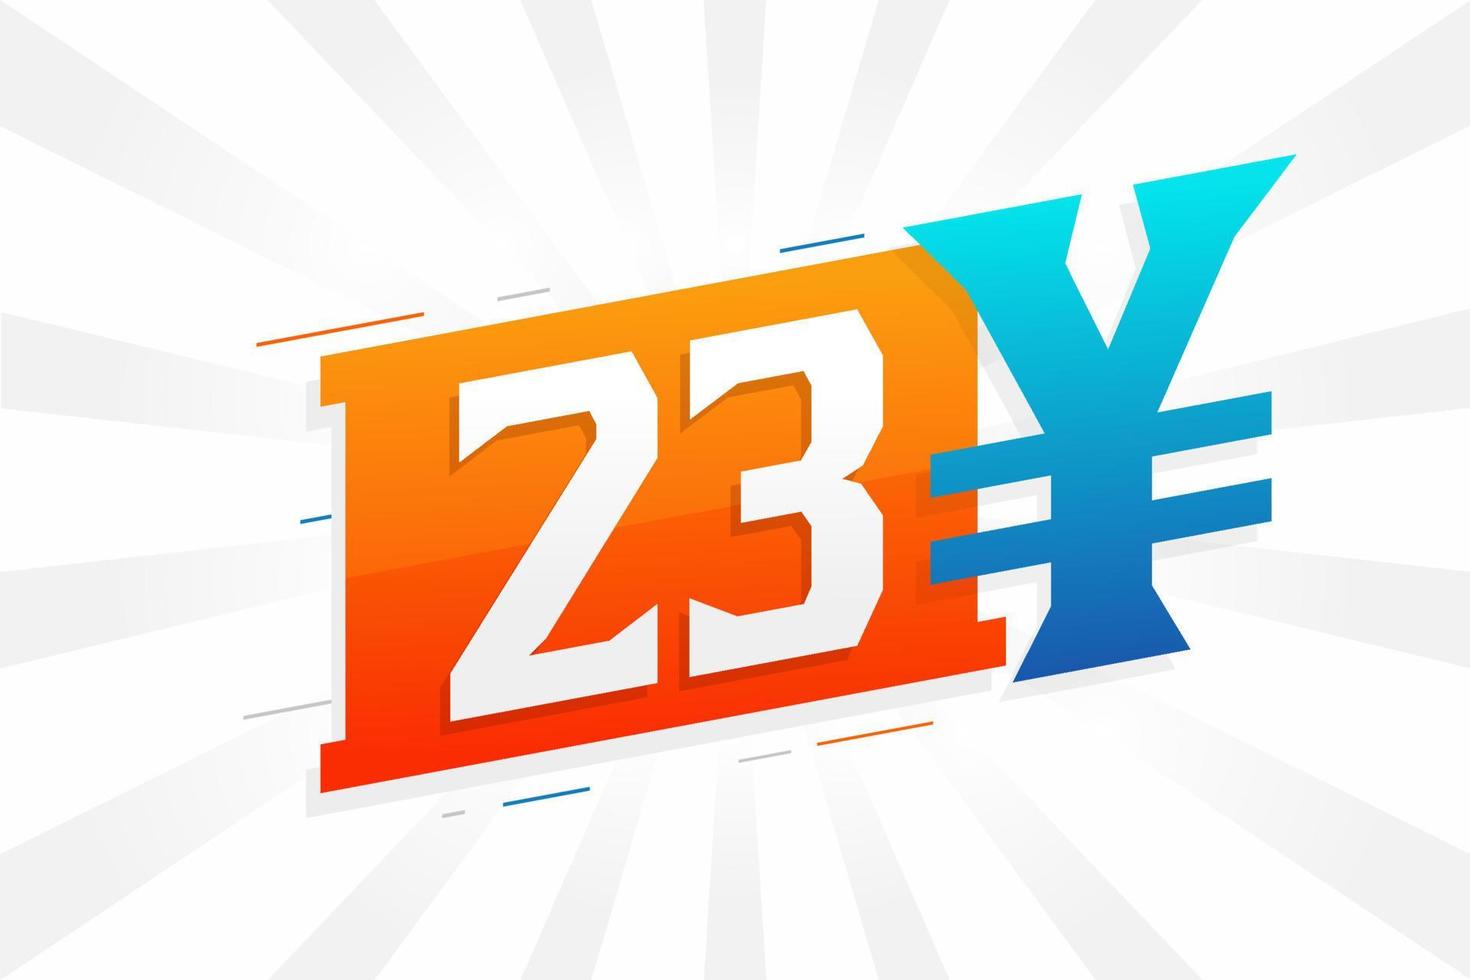 23 yuan Cinese moneta vettore testo simbolo. 23 yen giapponese moneta i soldi azione vettore